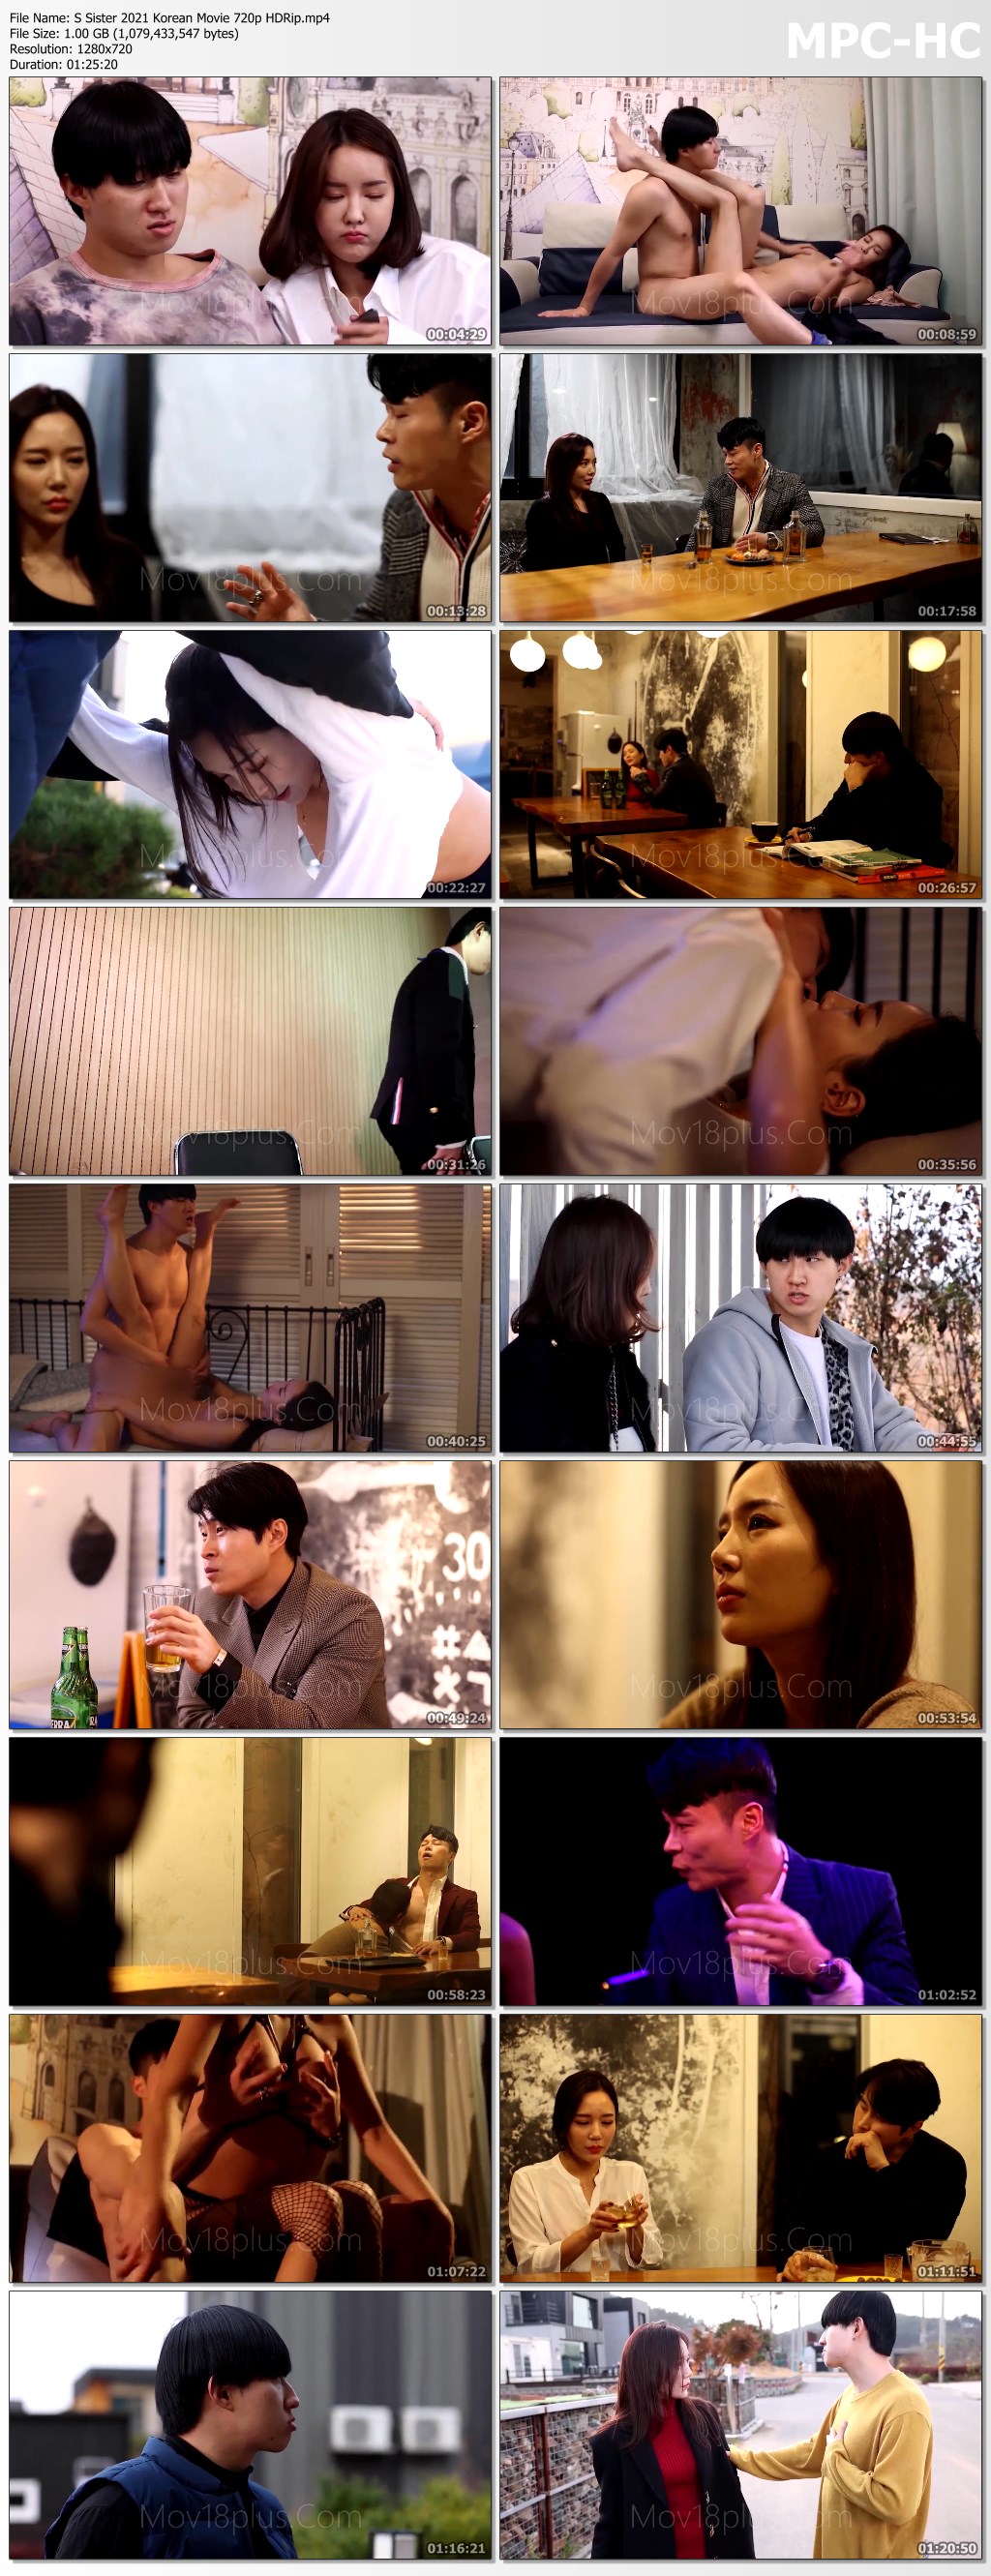 S-Sister-2021-Korean-Movie-720p-HDRip.mp4_thumbs.jpg